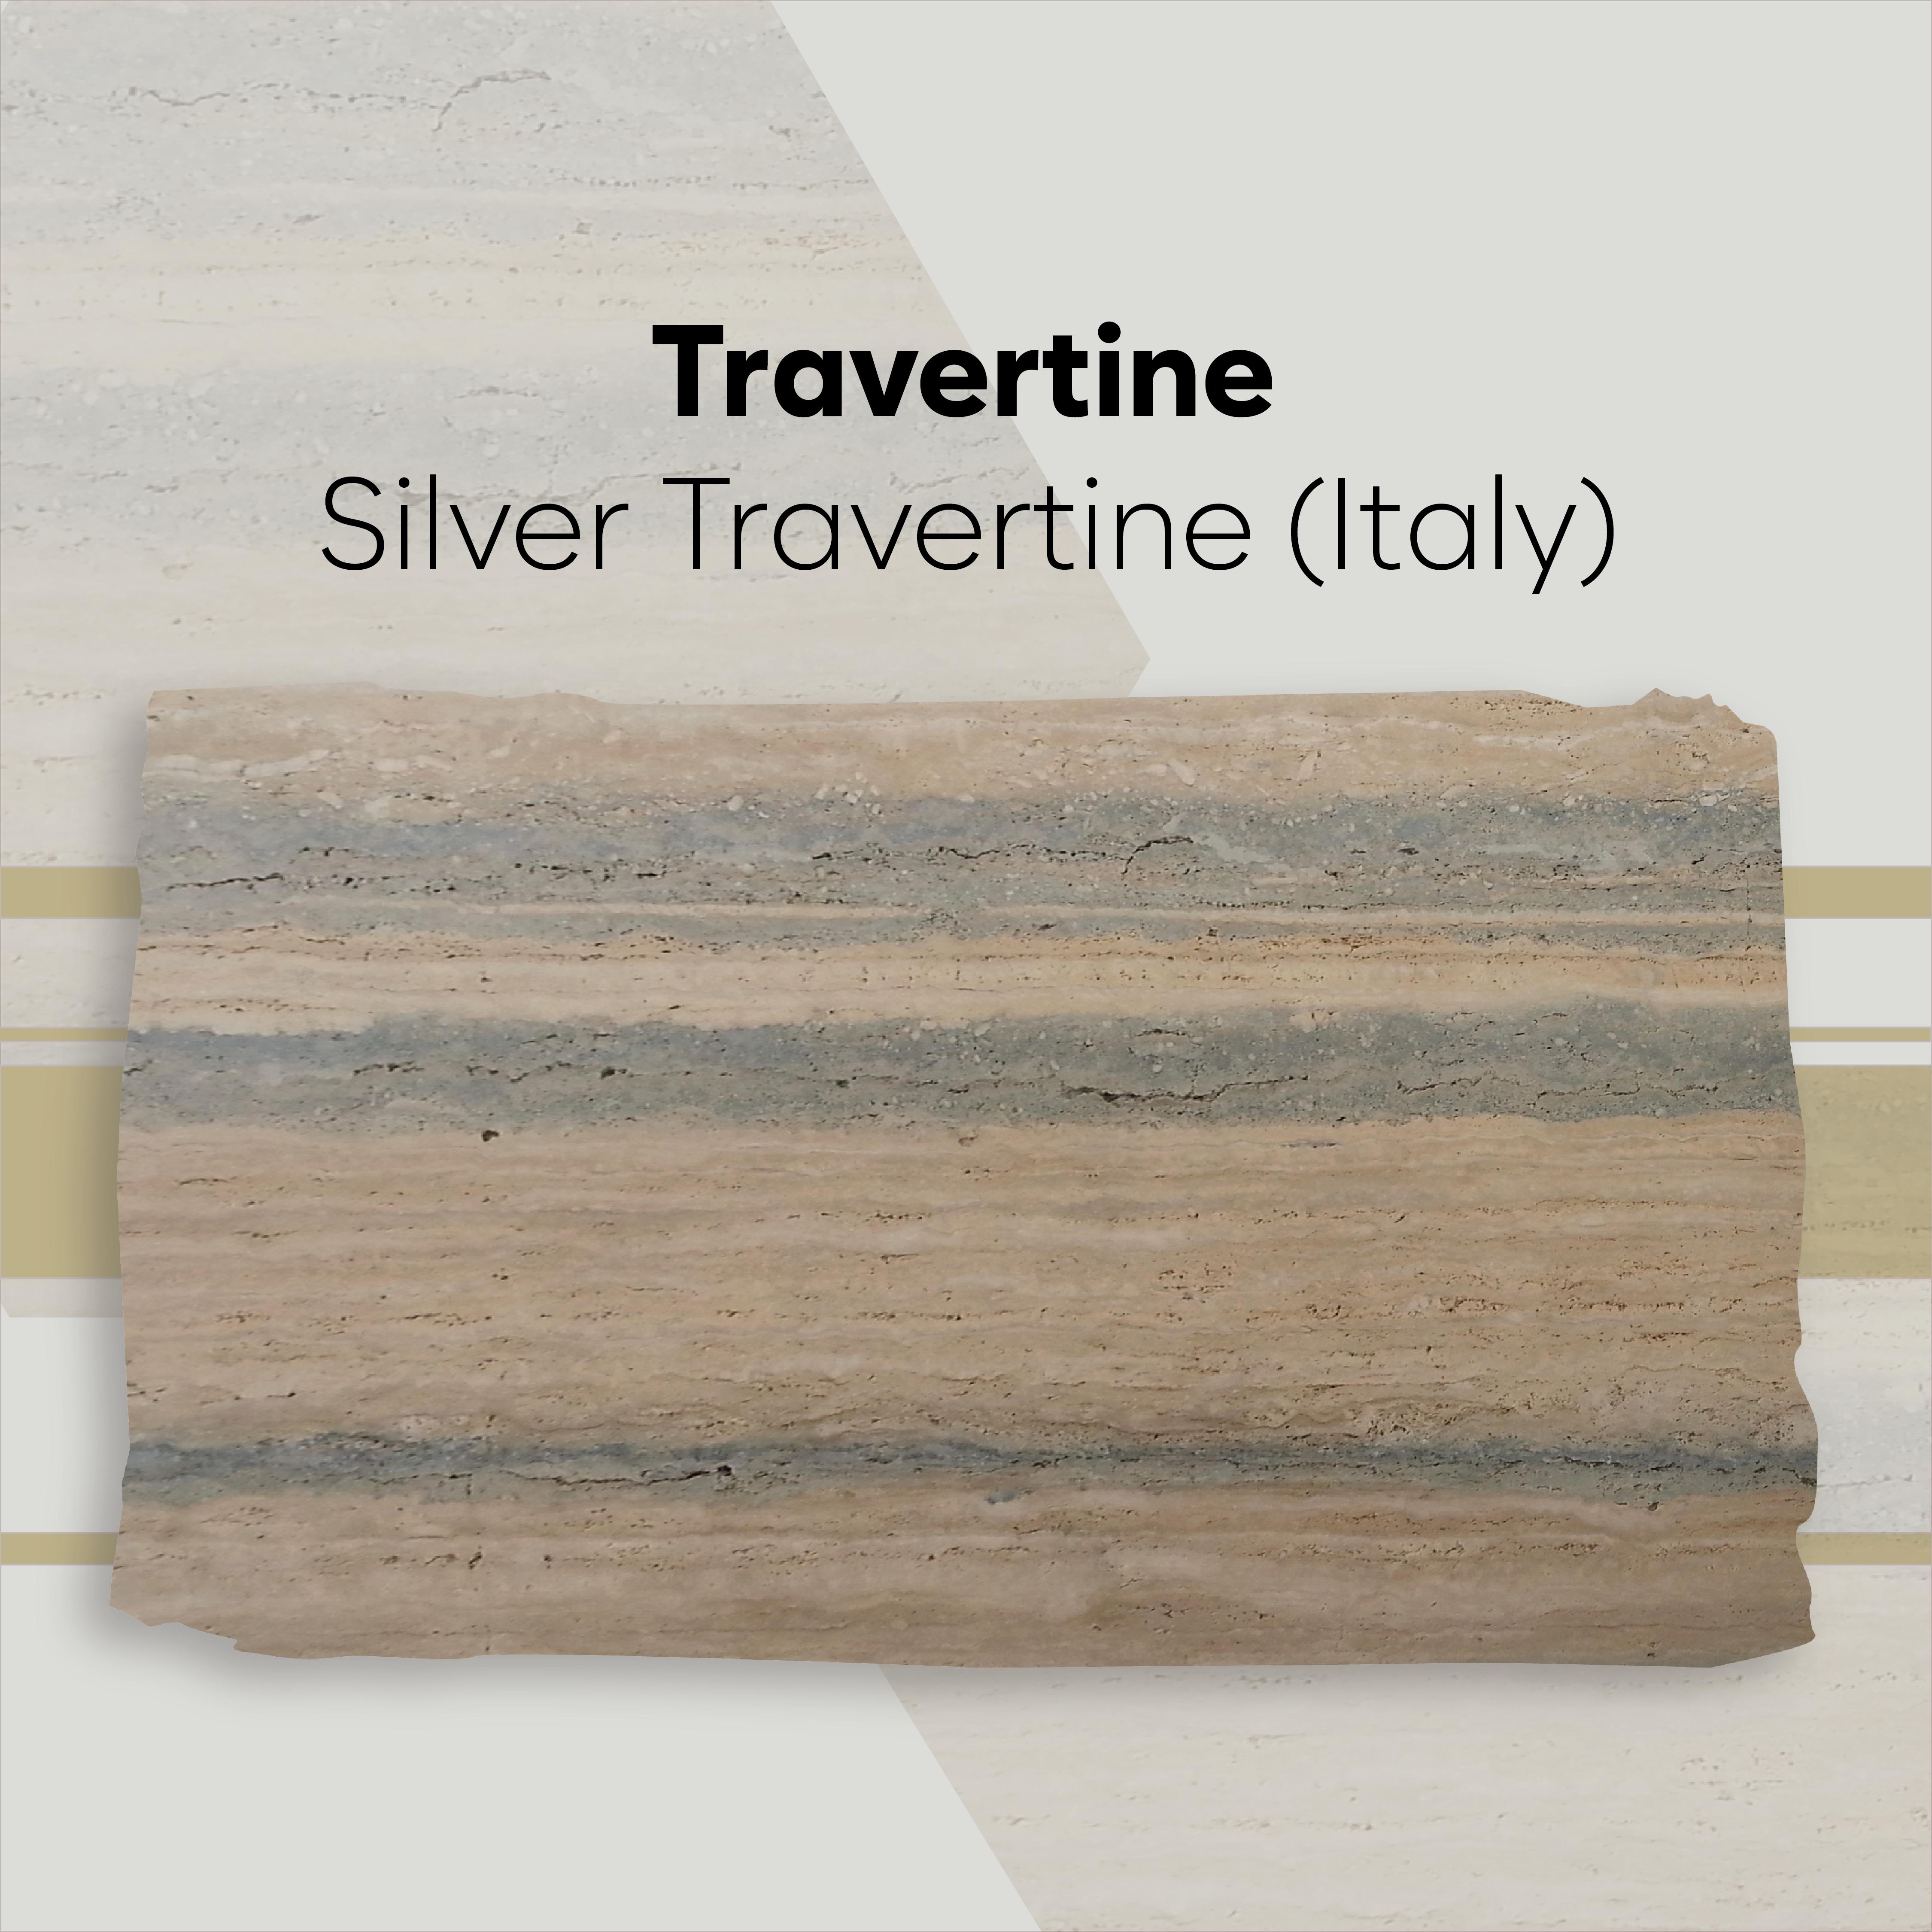 Silver Travertine (Italy)